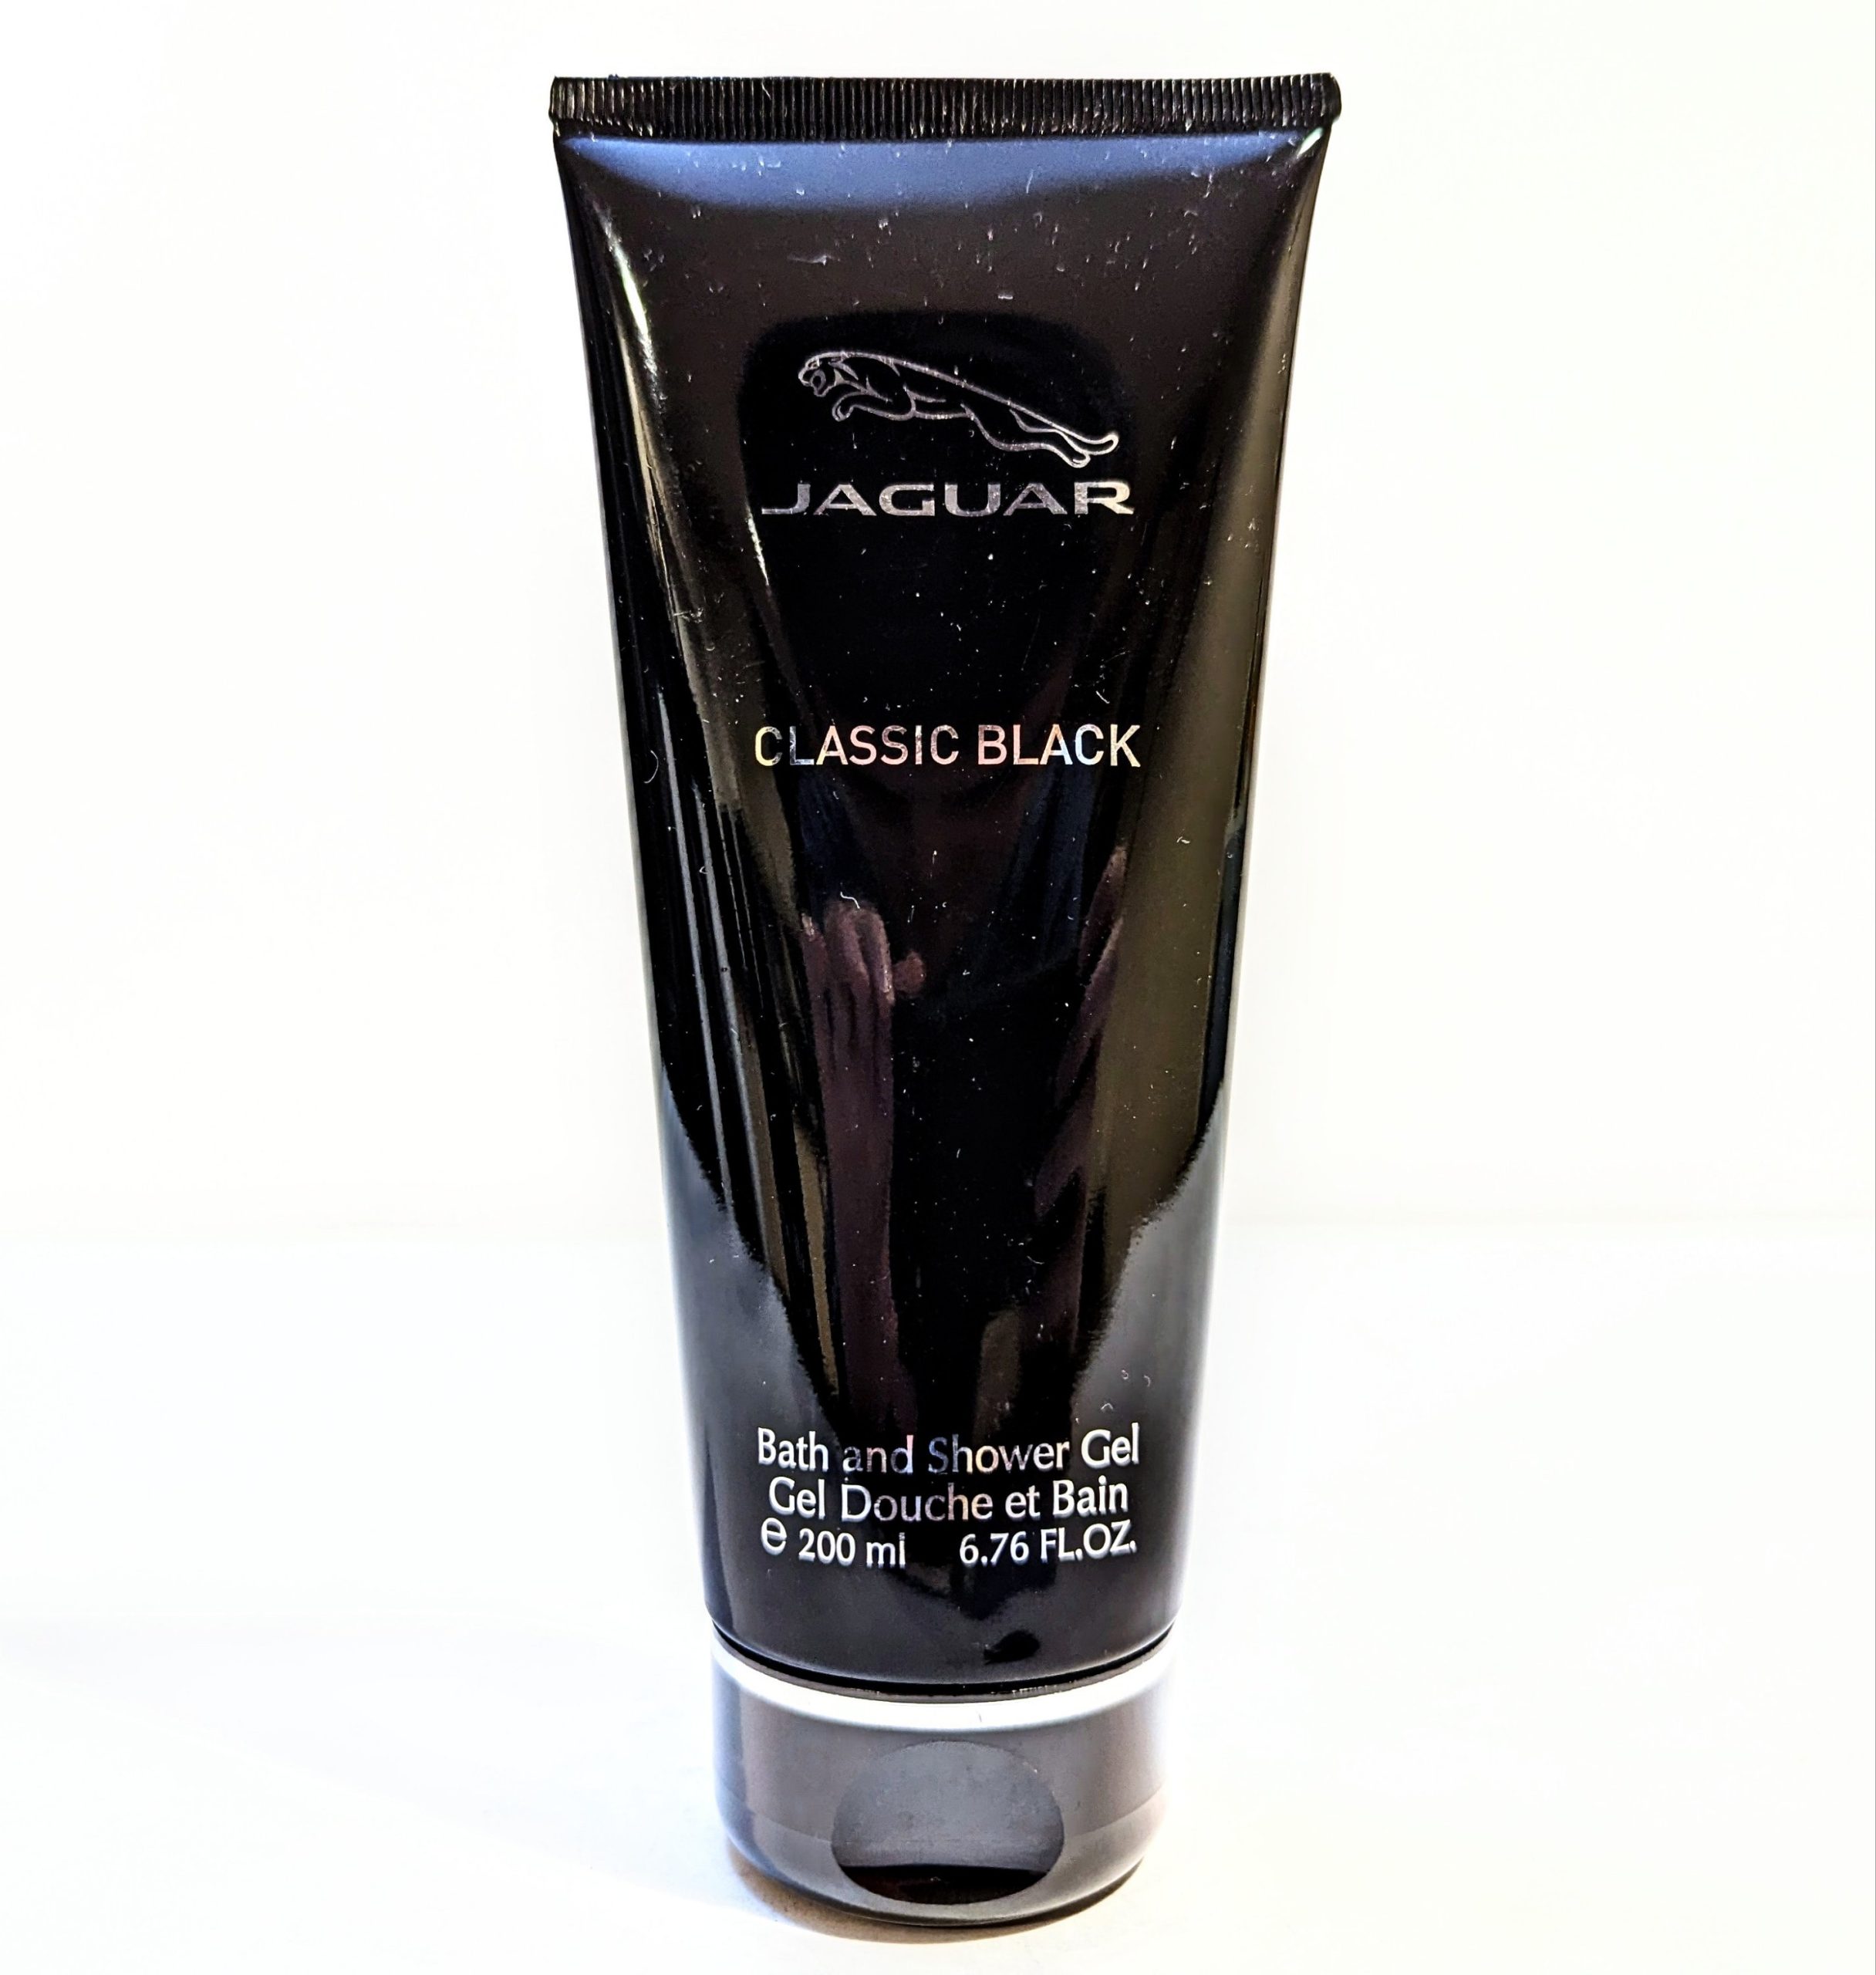 Jaguar classic black shower gel.